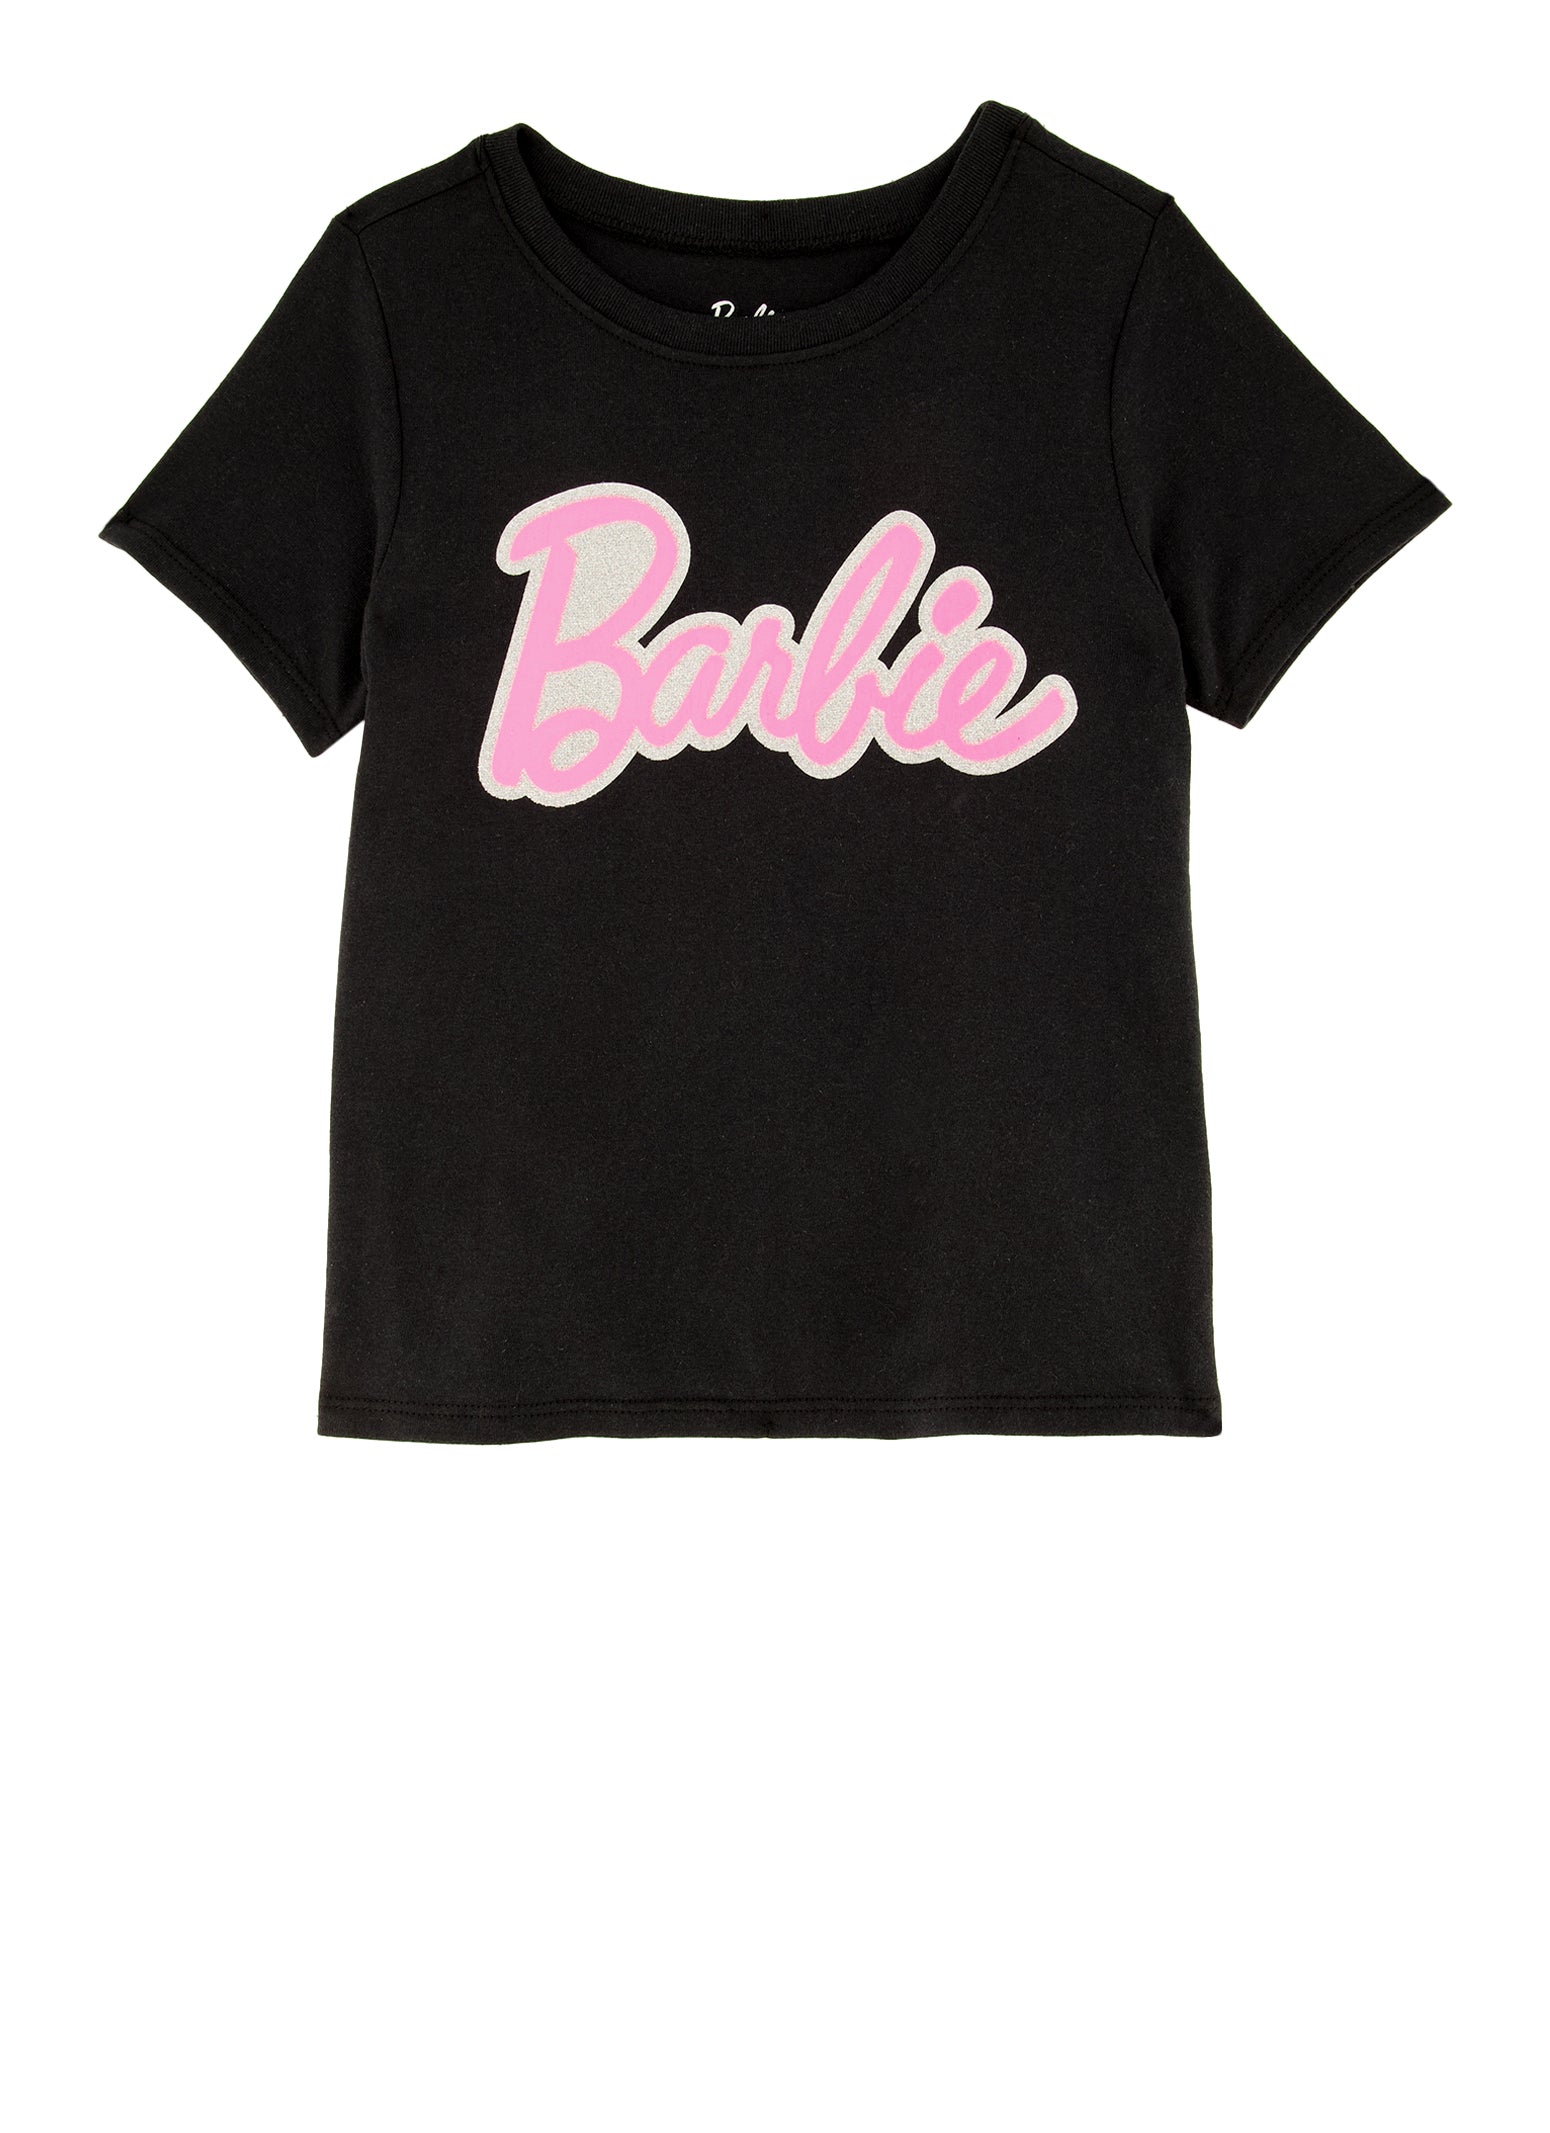 Girls Barbie Glitter Graphic T Shirt